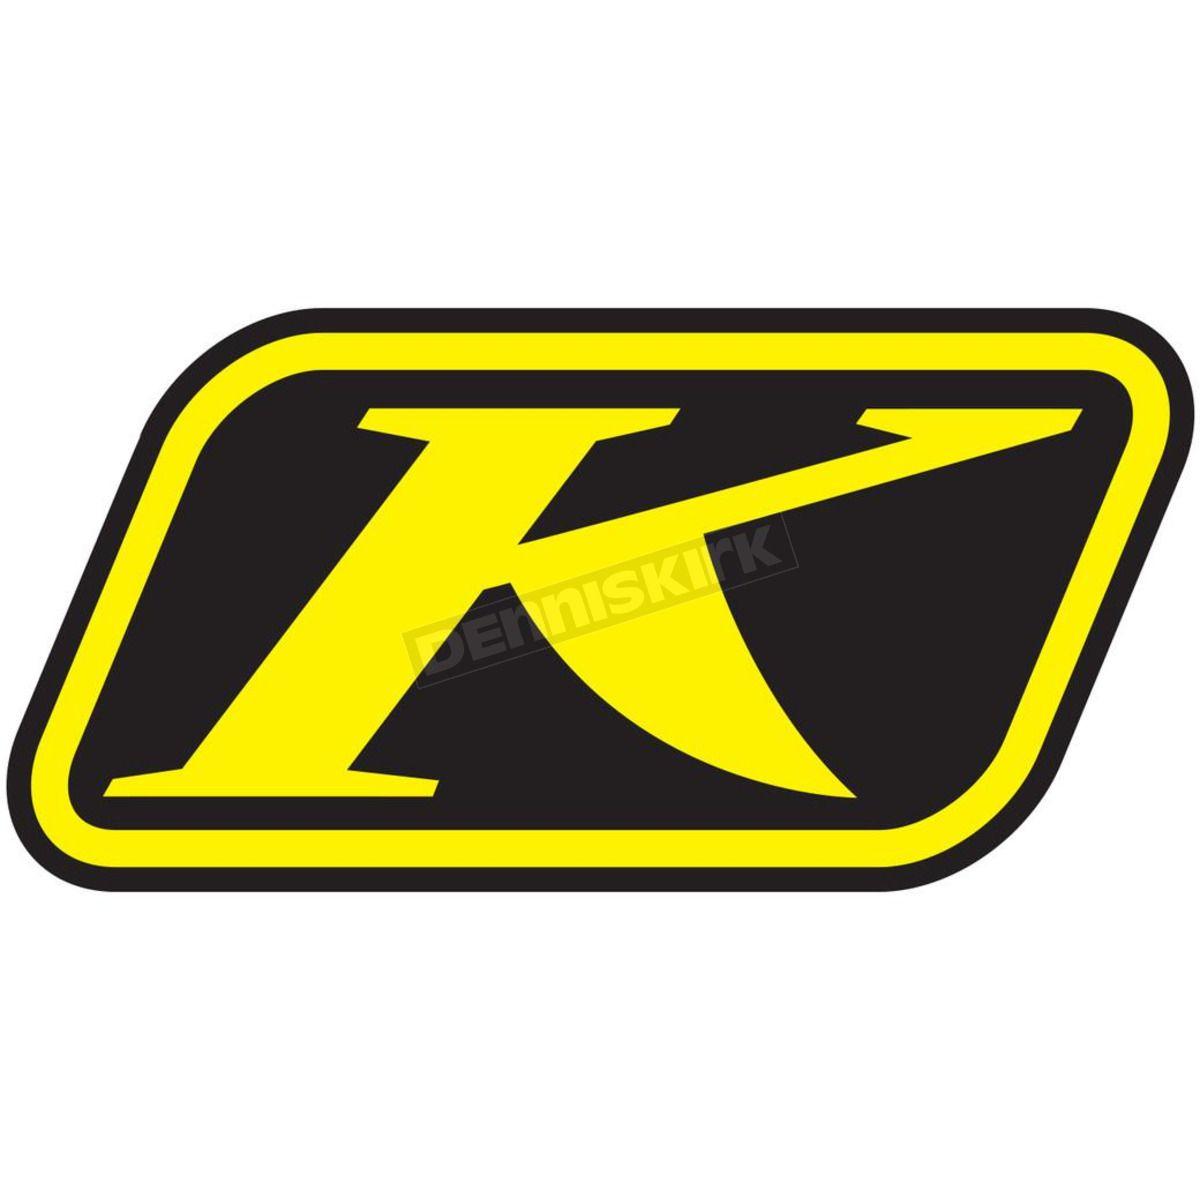 Klim Logo - K Decal 003 008 000